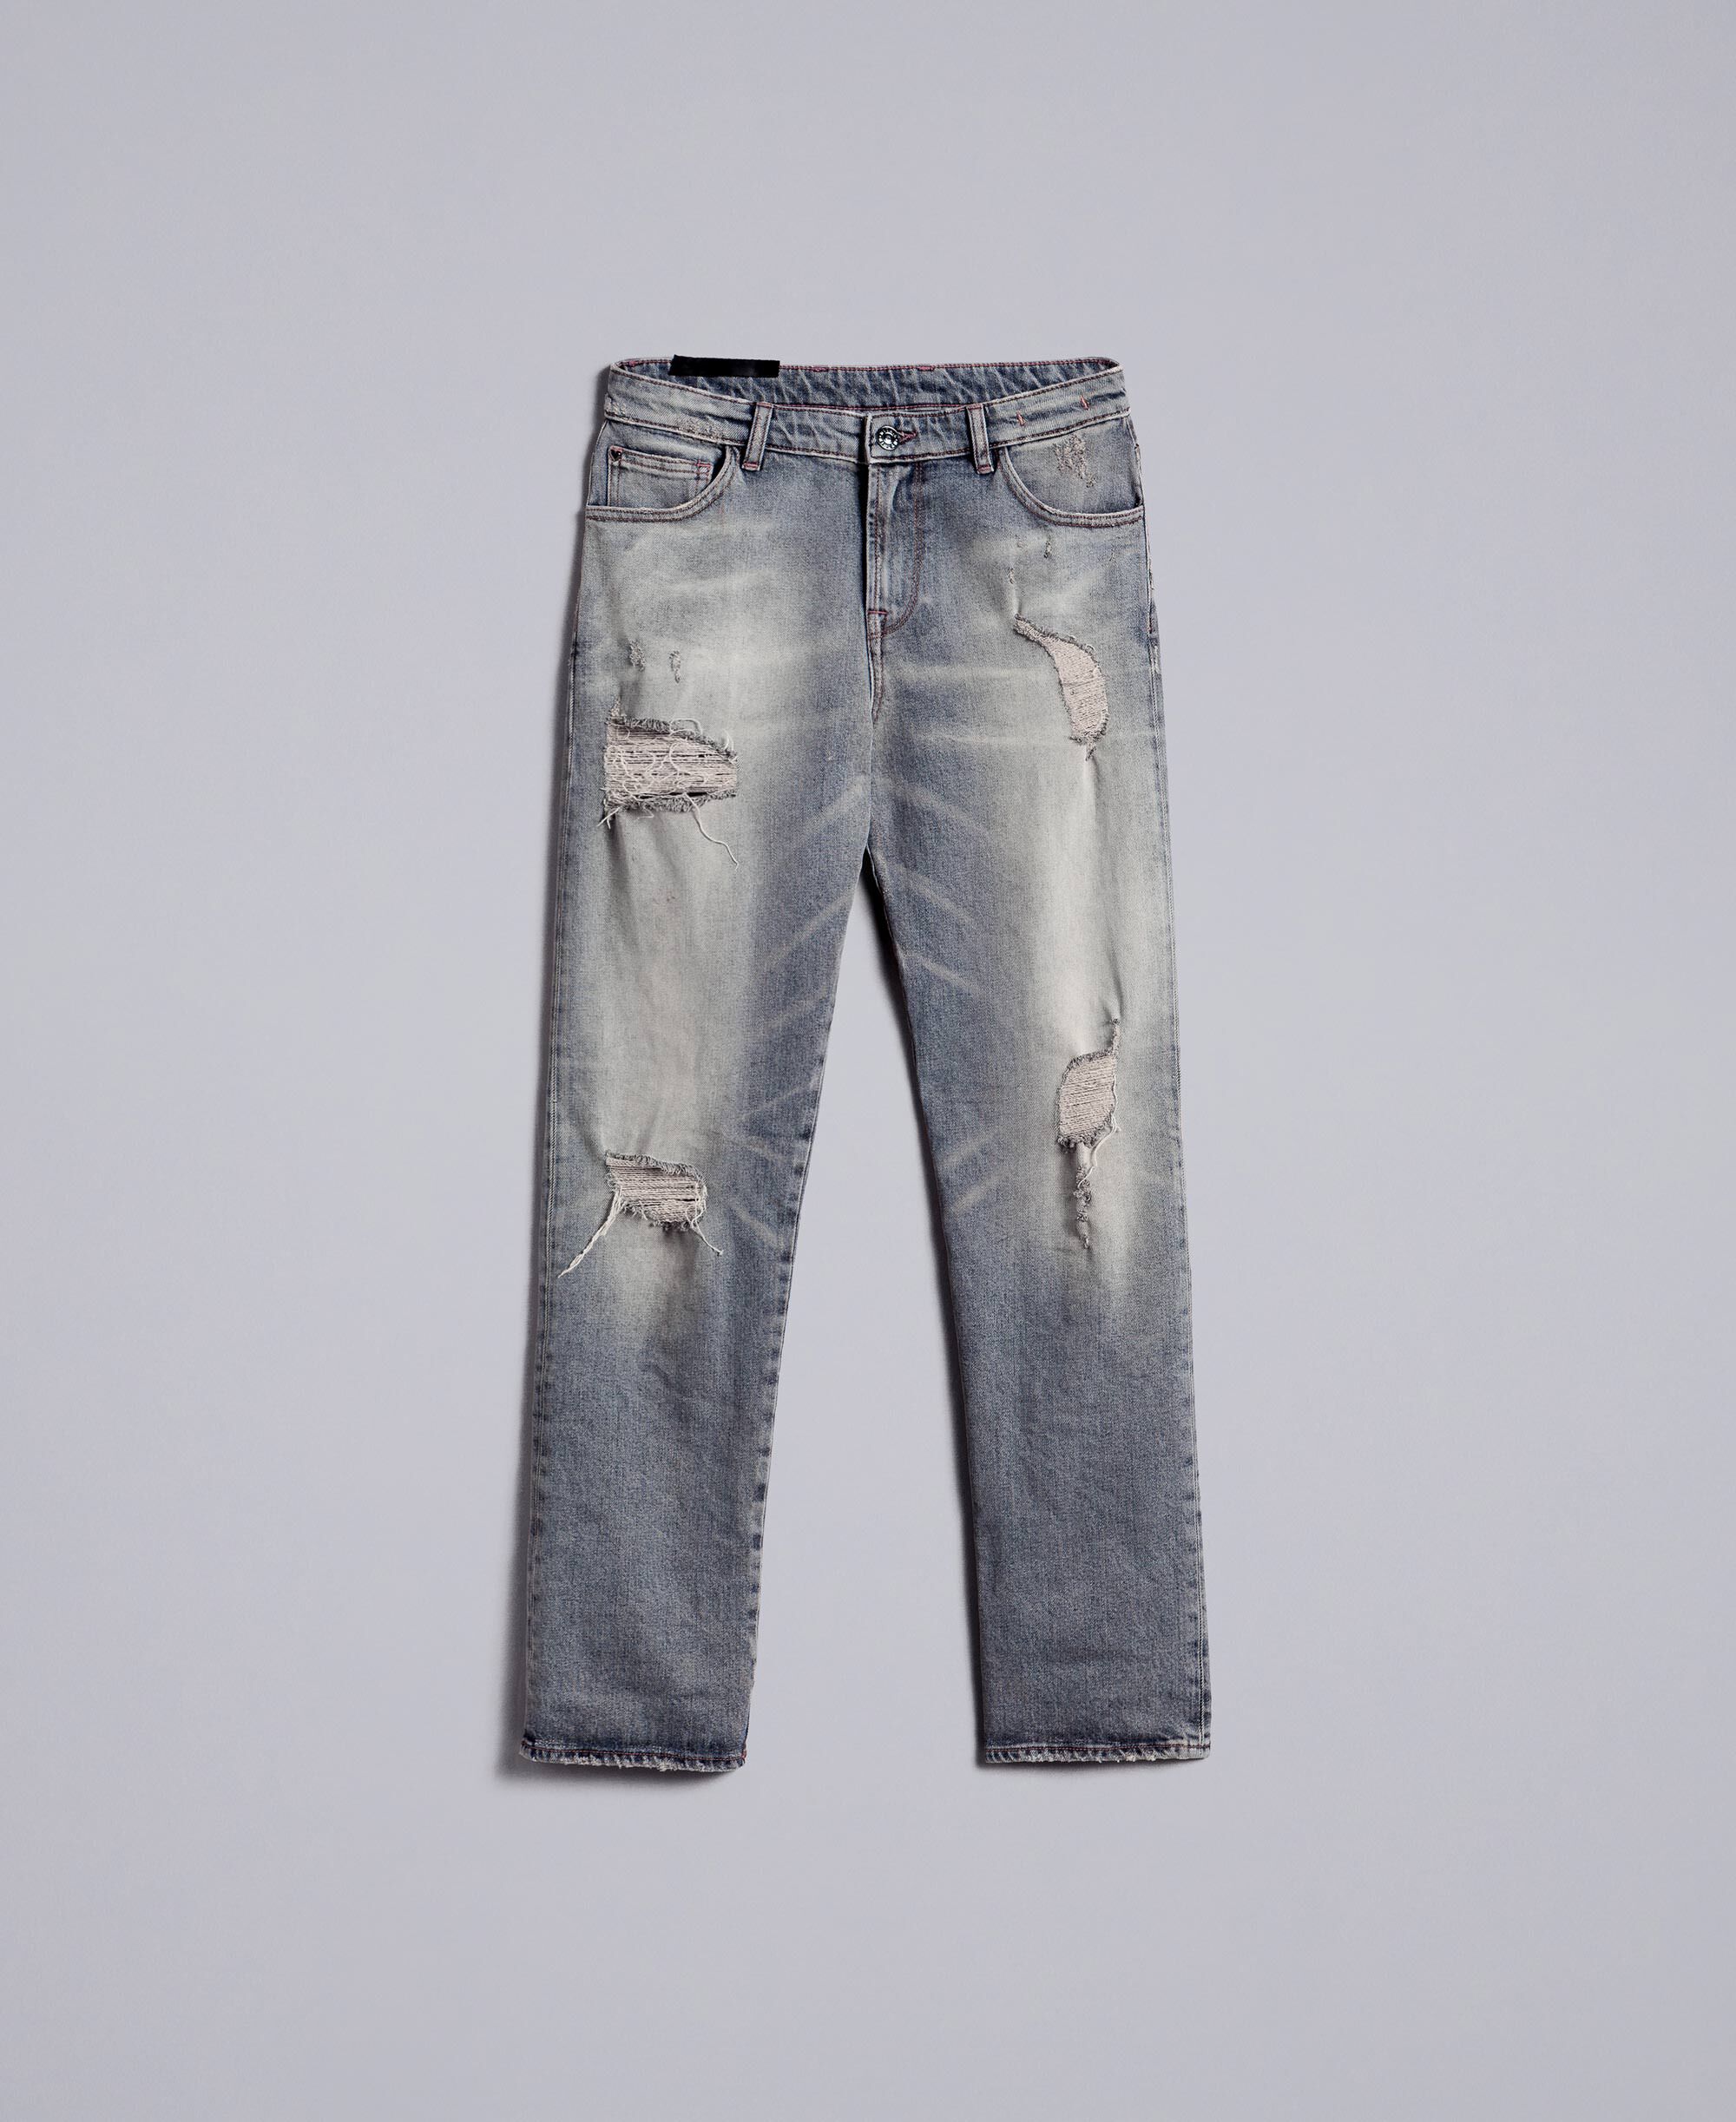 vintage inspired jeans